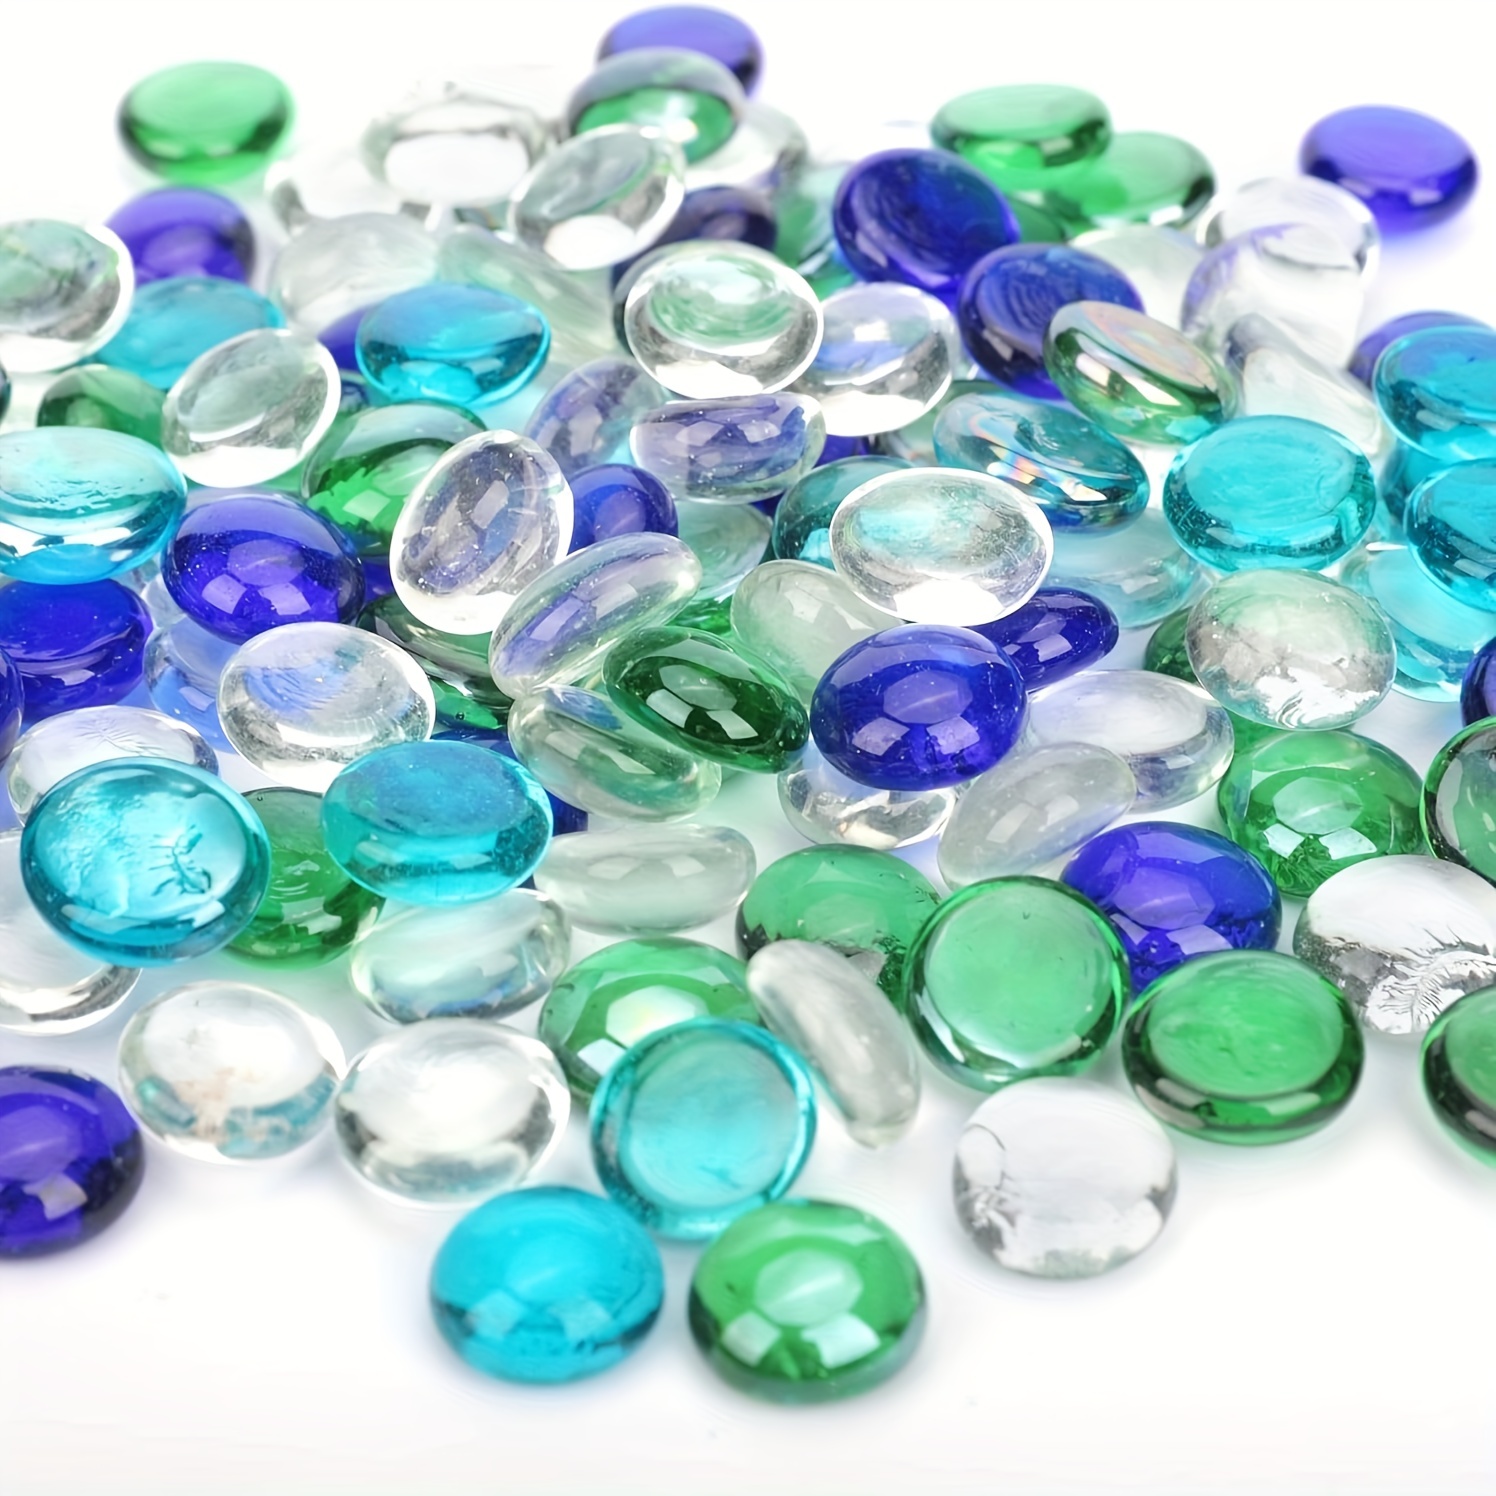 Vase Filler - Marbles for Vases - Blue Accent Gems, Glass Pebbles 10 oz.  Bags - 9 Bags 